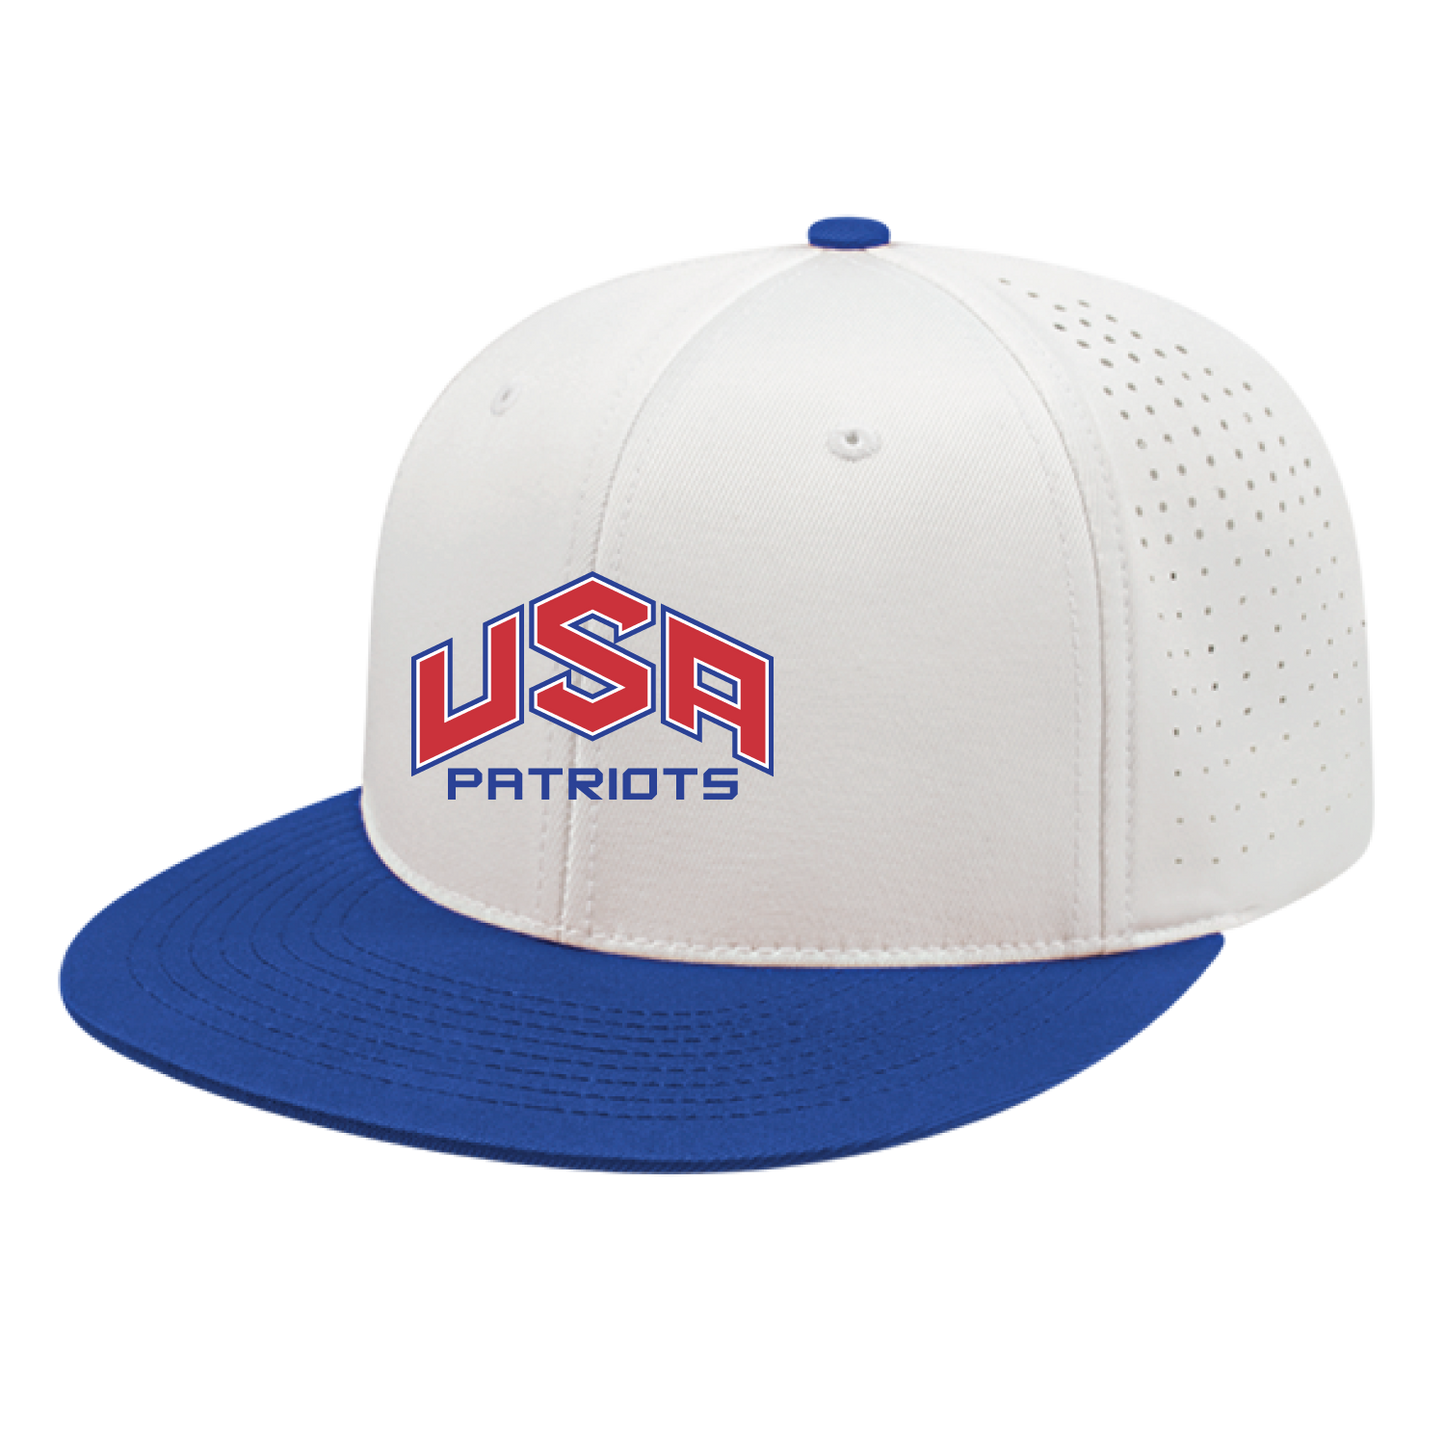 USA Patriots FlexFit Hat - White/Royal Blue